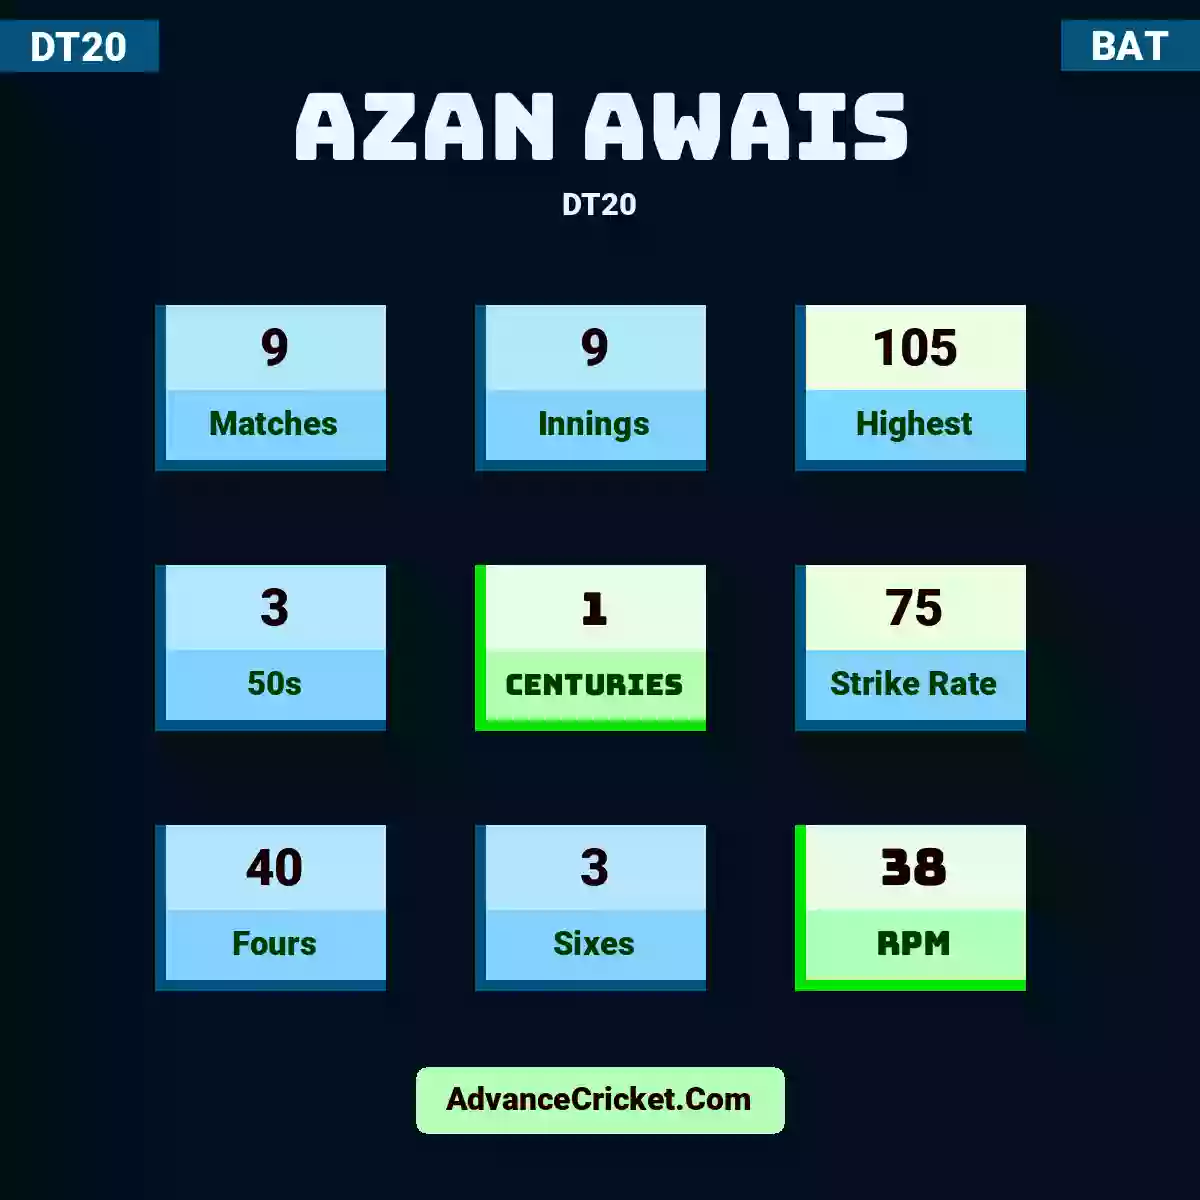 Azan Awais DT20 , Azan Awais played 9 matches, scored 105 runs as highest, 3 half-centuries, and 1 centuries, with a strike rate of 75. A.Awais hit 40 fours and 3 sixes, with an RPM of 38.